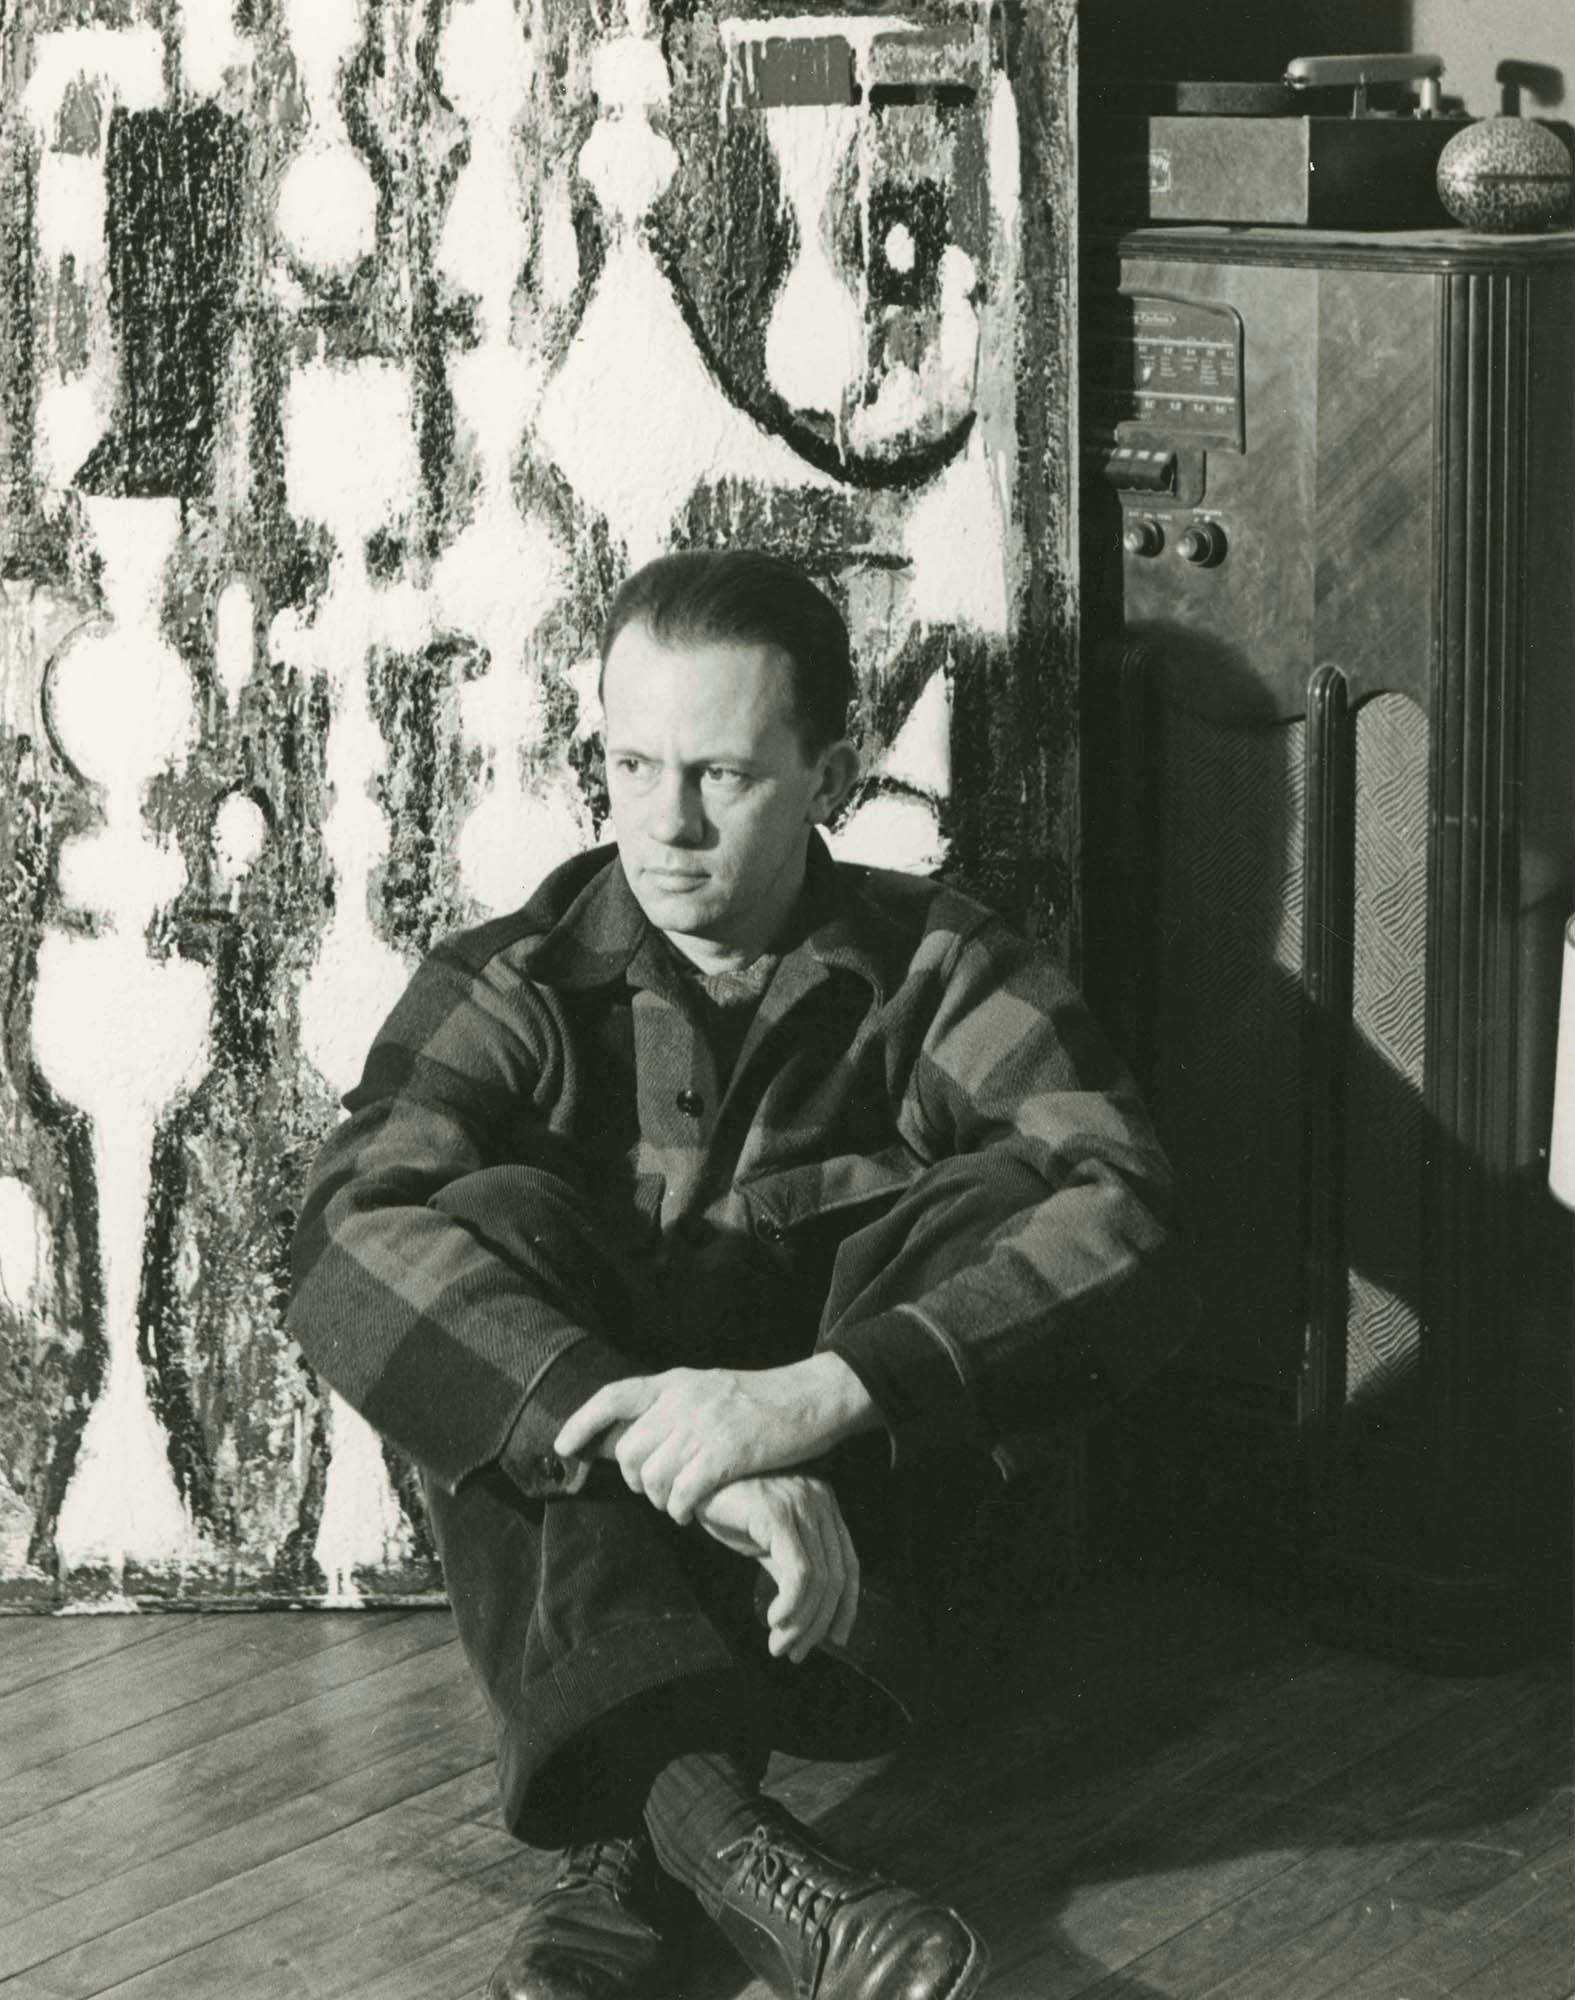 Richard Pousette-Dart, Self-portrait, Sloatsburg, NY, c. 1953 – The Richard Pousette-Dart Foundation